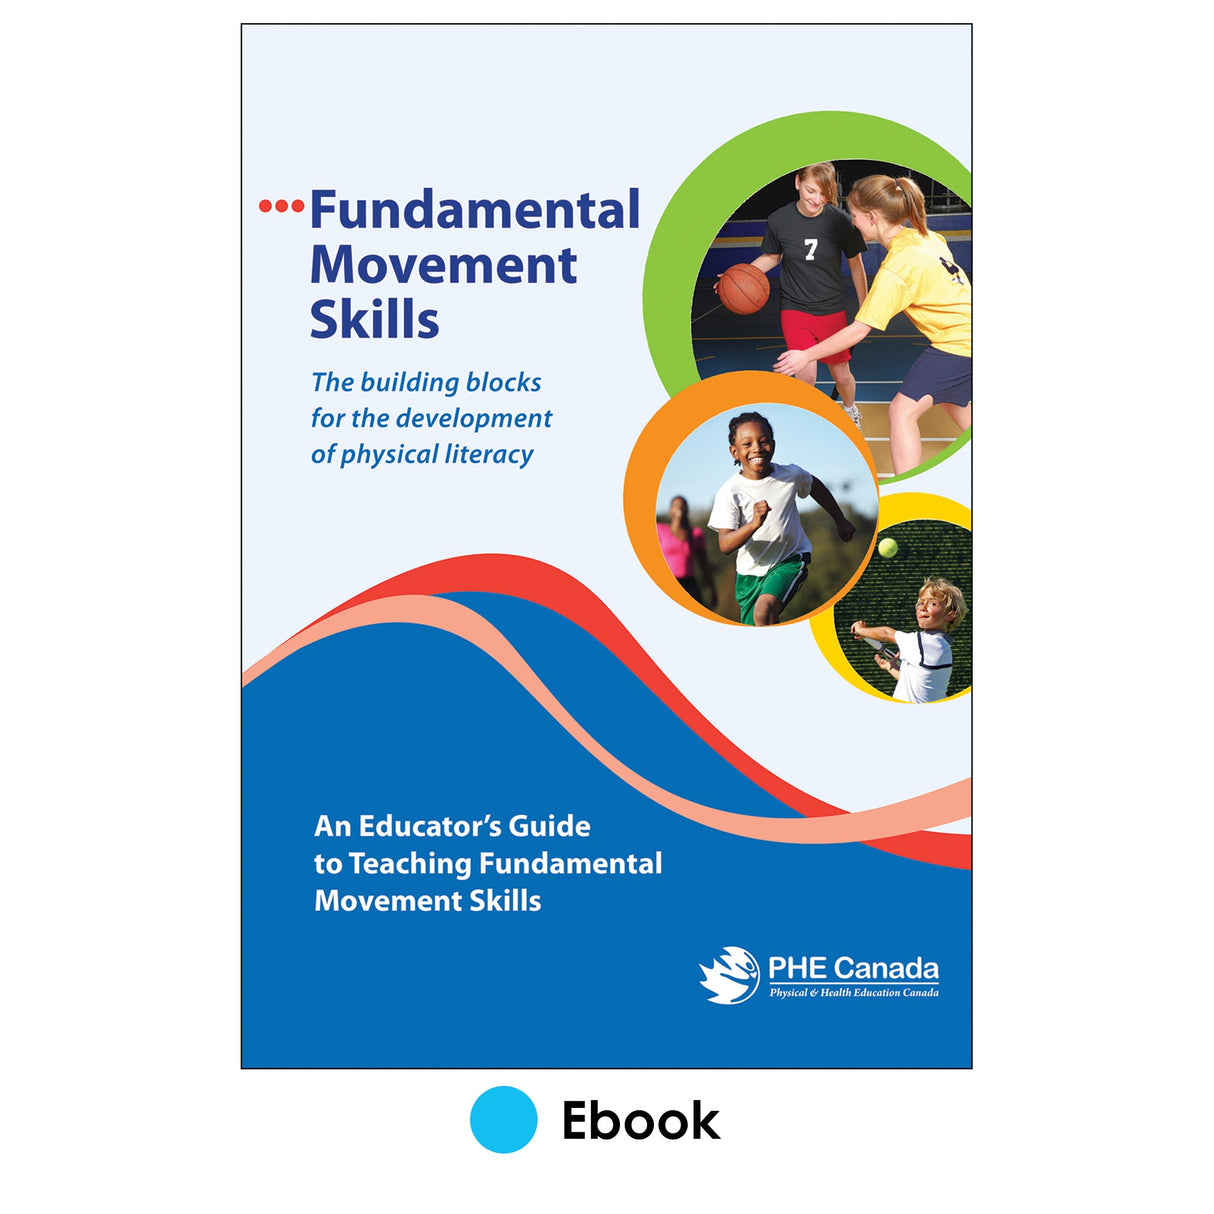 Fundamental Movement Skills epub: An Educator's Guide to Teaching Fundamental Movements